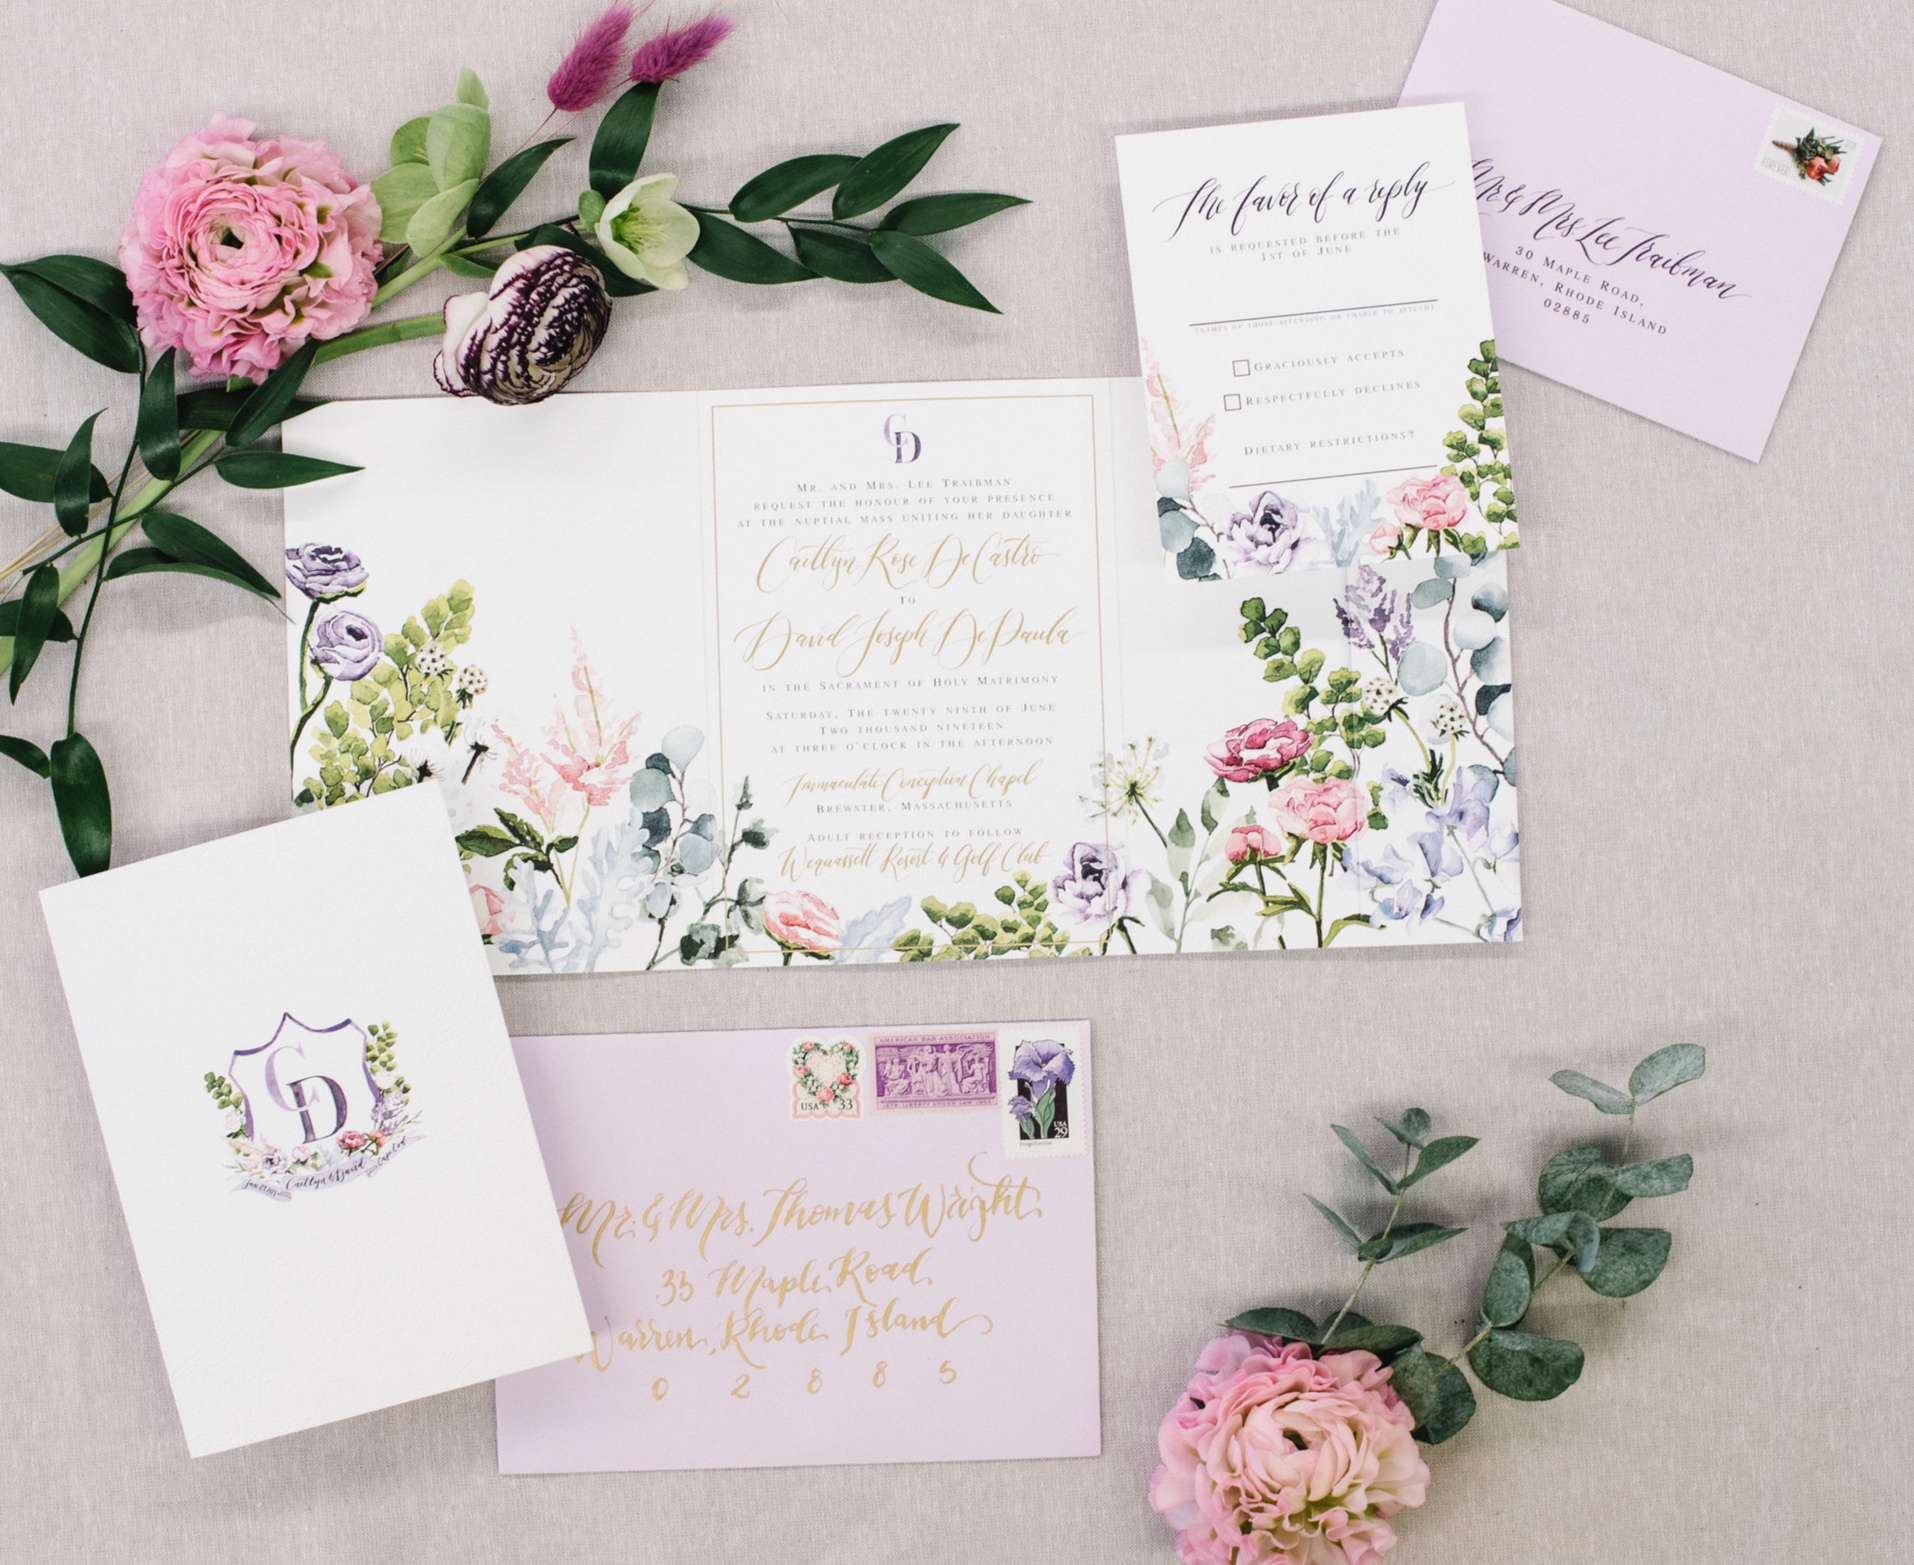 PERSONALISED WEDDING INVITATIONS Romantic Silhouette Flower Garden & Envelopes